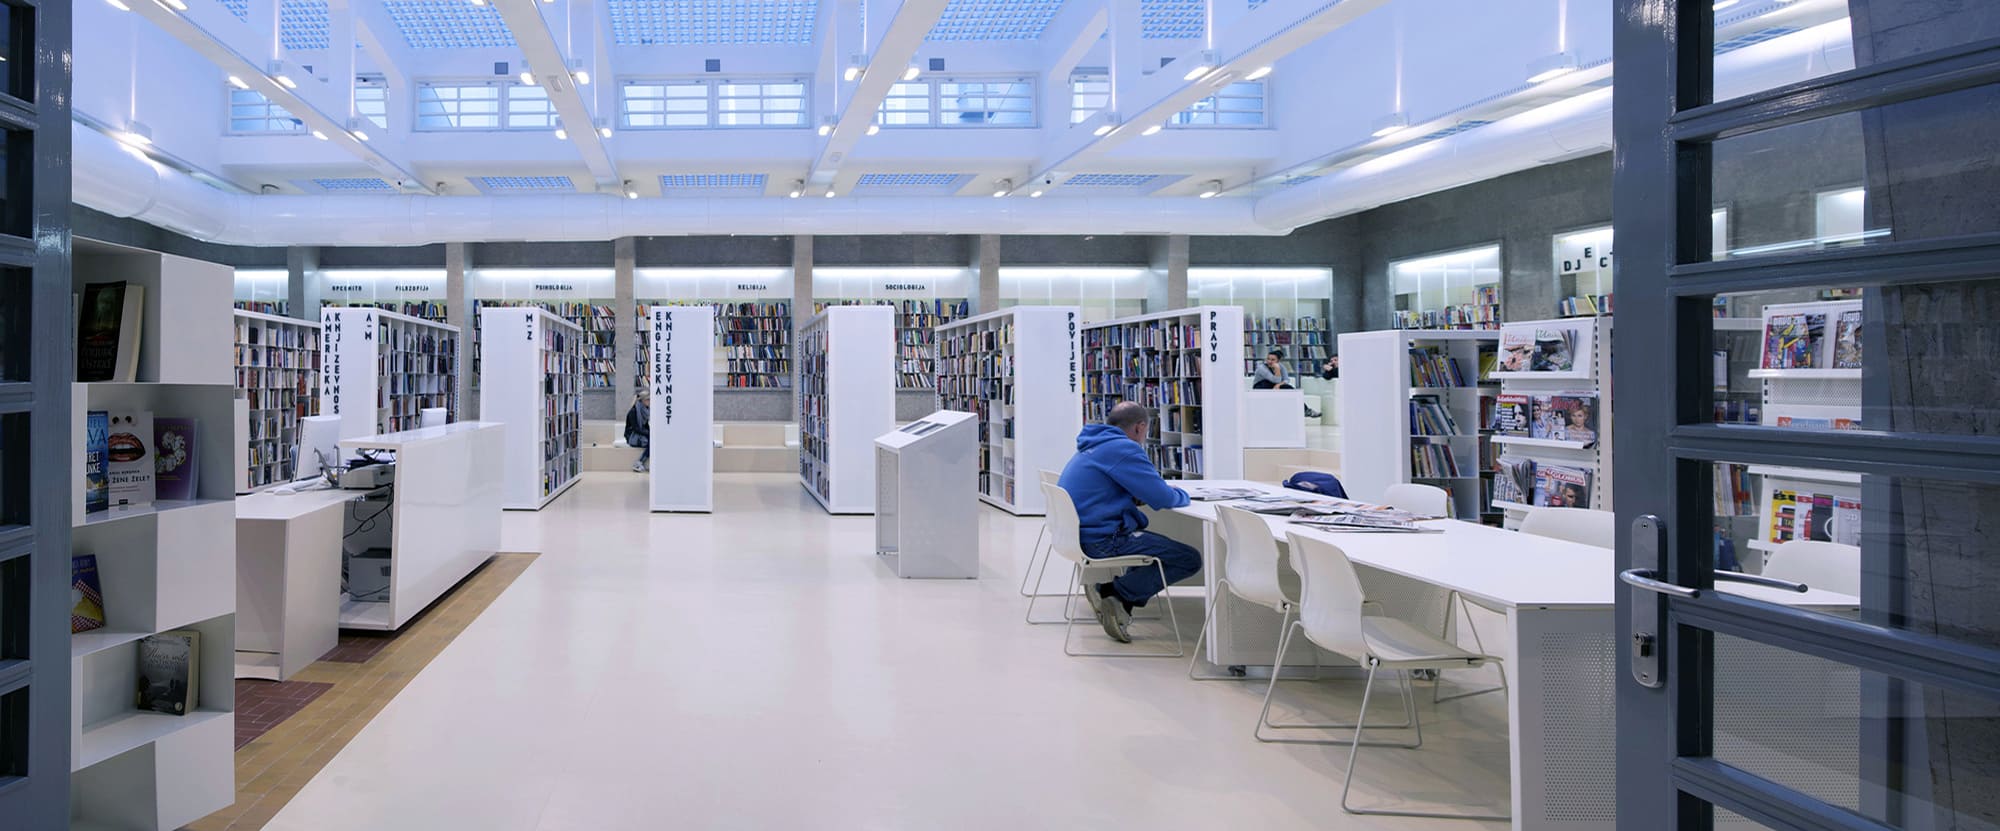 Labin Public Library